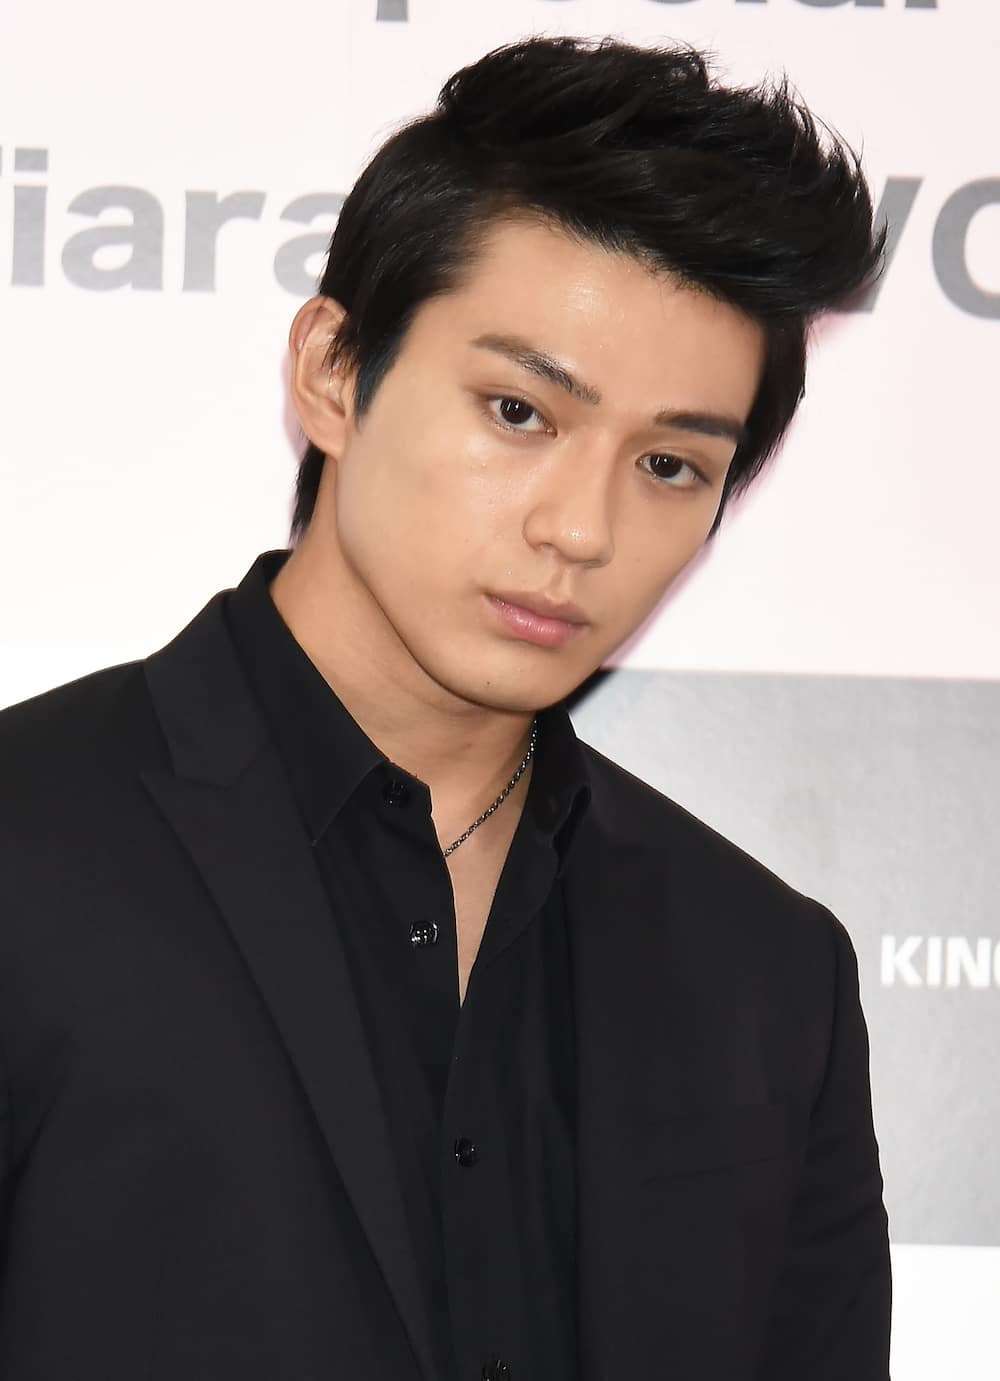 22 famous handsome Japanese actors to follow on Instagram Tuko.co.ke